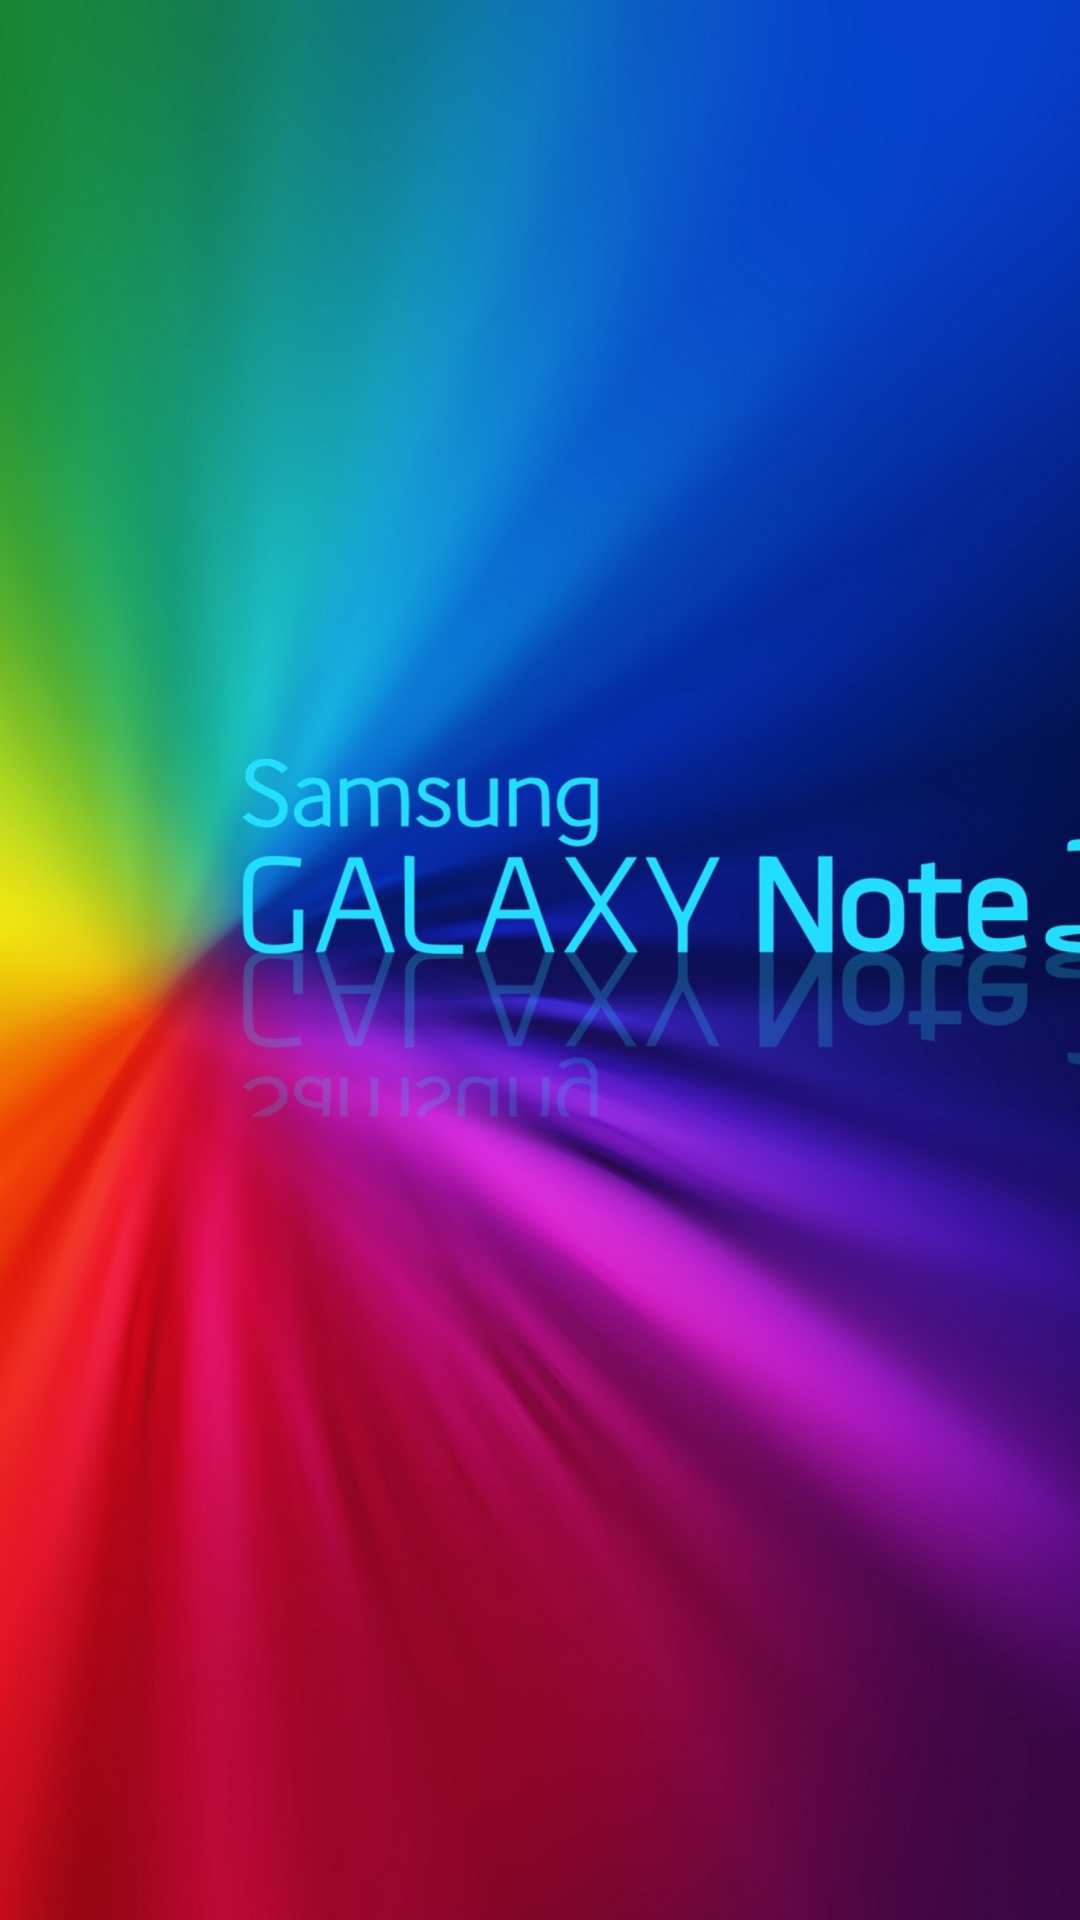 Das Samsung Galaxy Note 3 Wallpaper 1080x1920